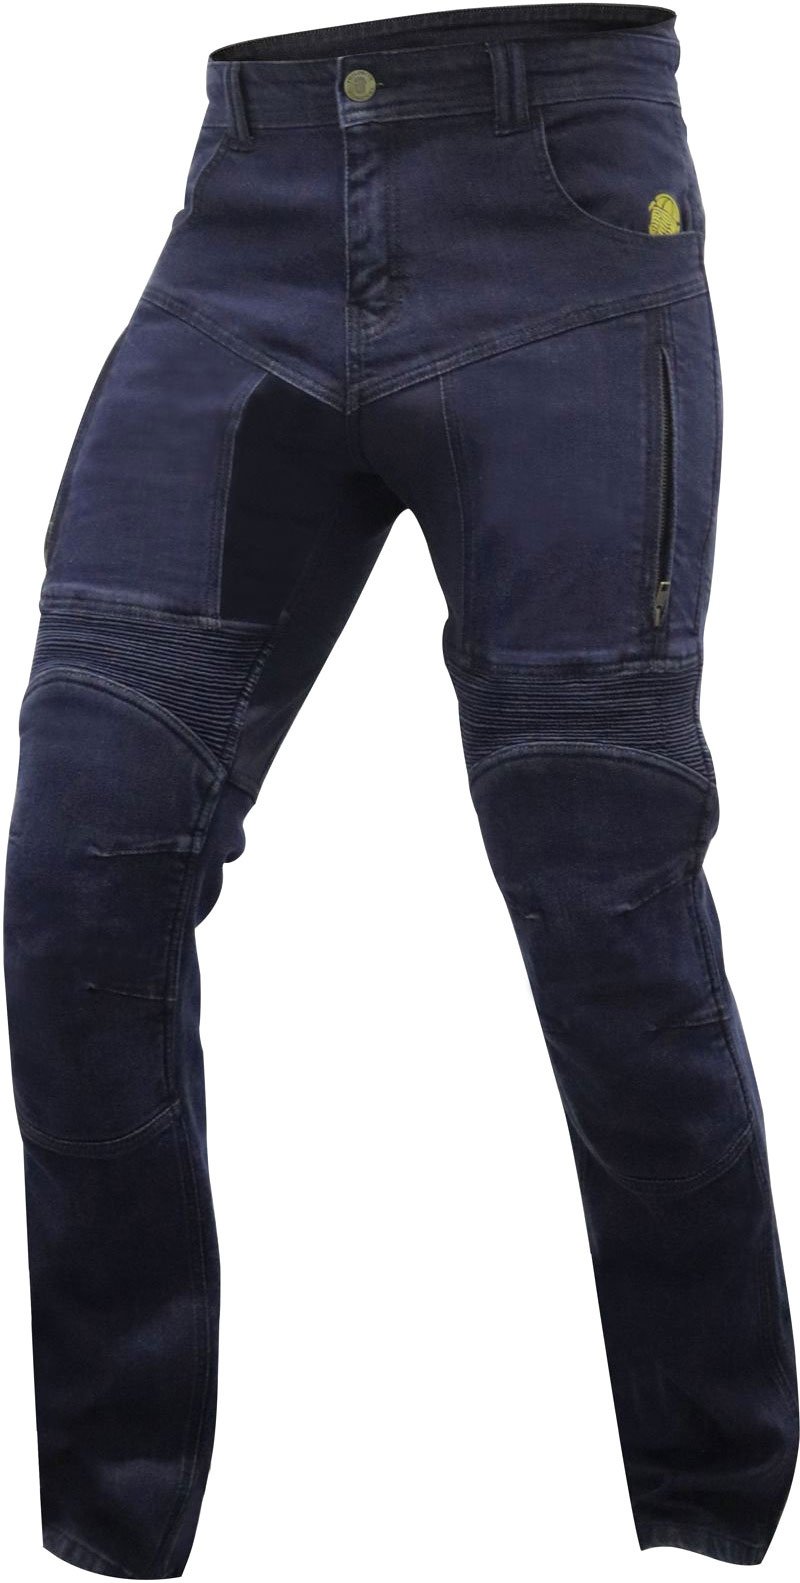 Trilobite Parado, jeans coupe ajustée - Bleu - 34